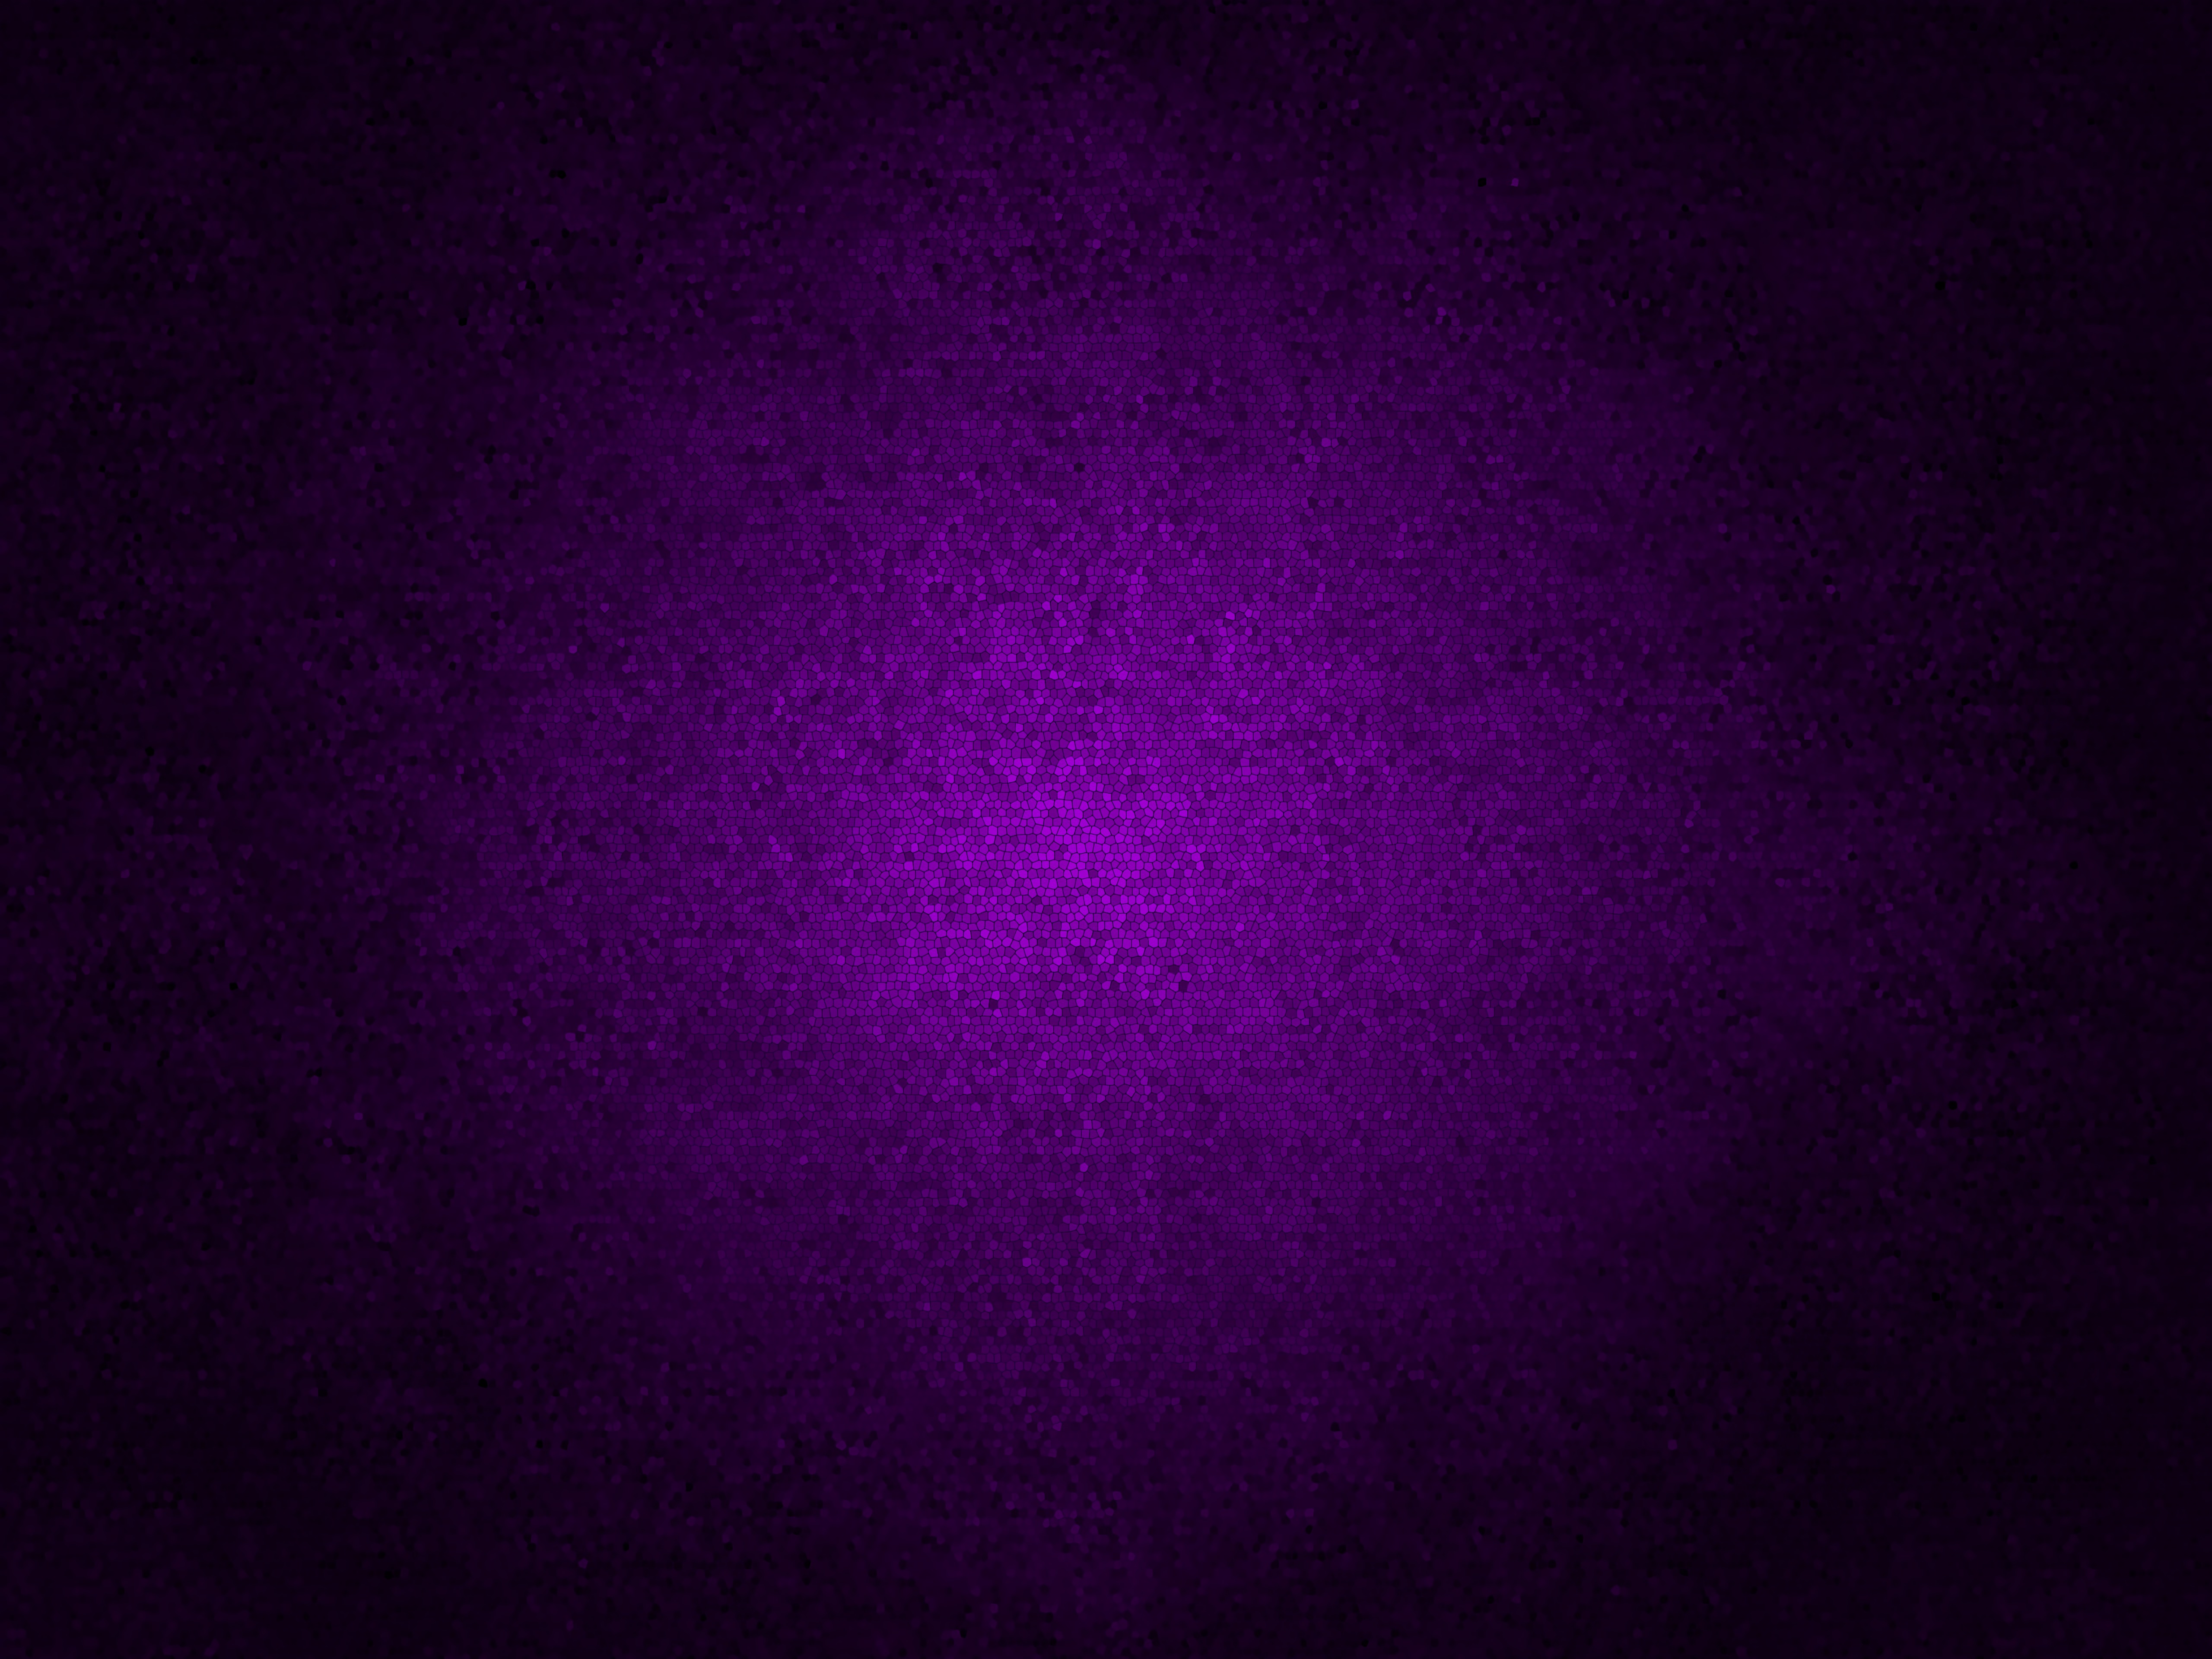 Free HD purple, abstract, violet, dark, mosaic, patterns